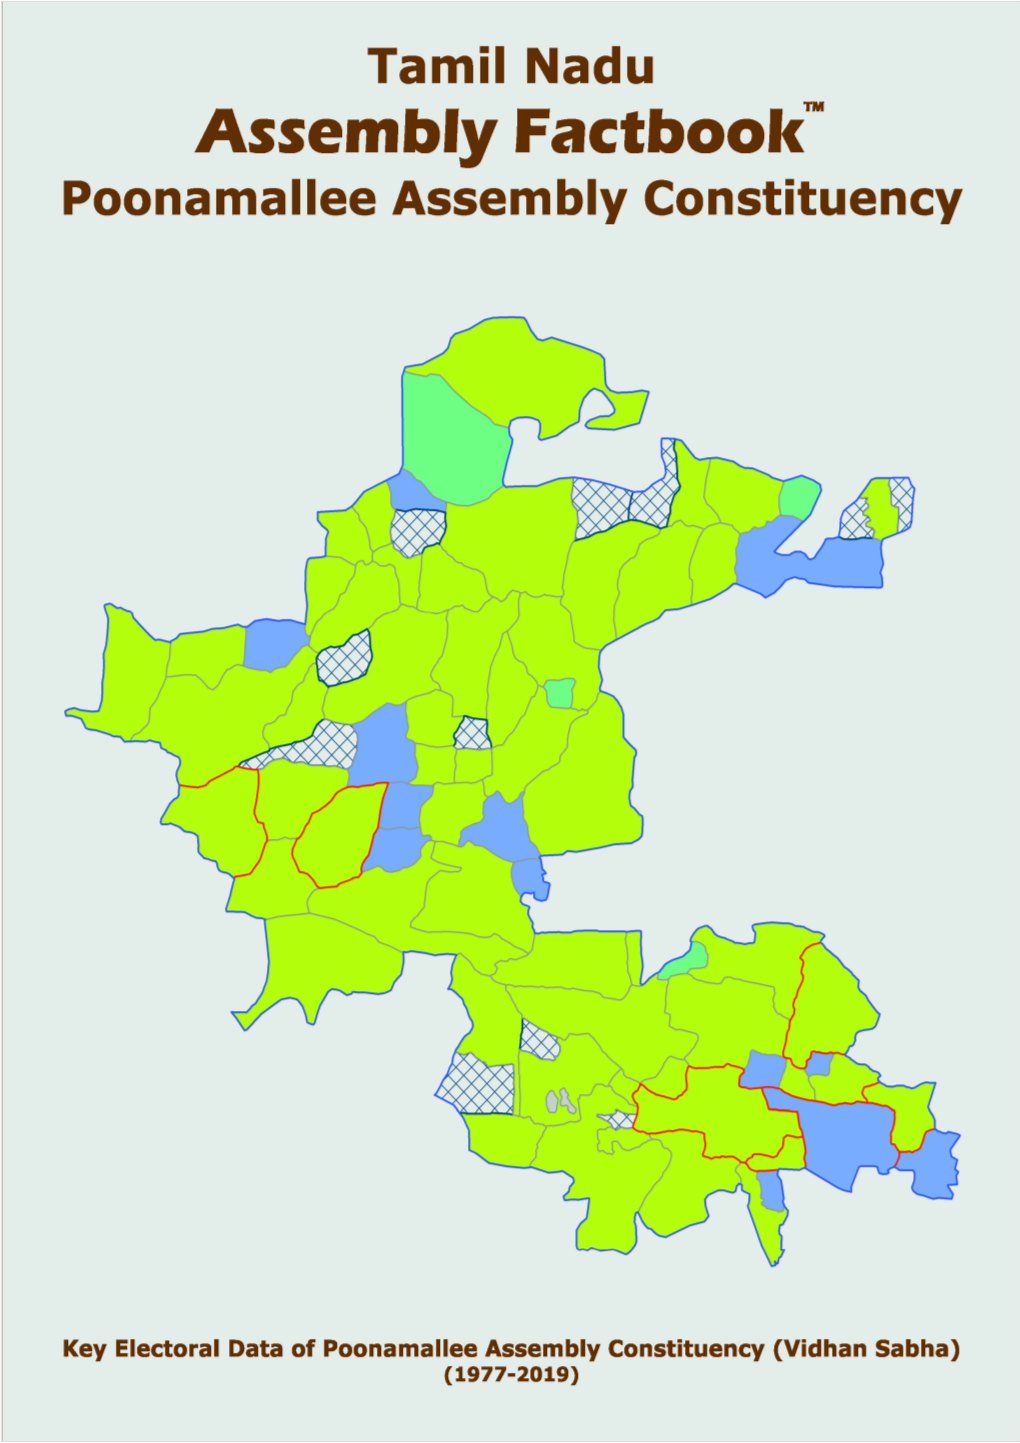 Poonamallee Assembly Tamil Nadu Factbook